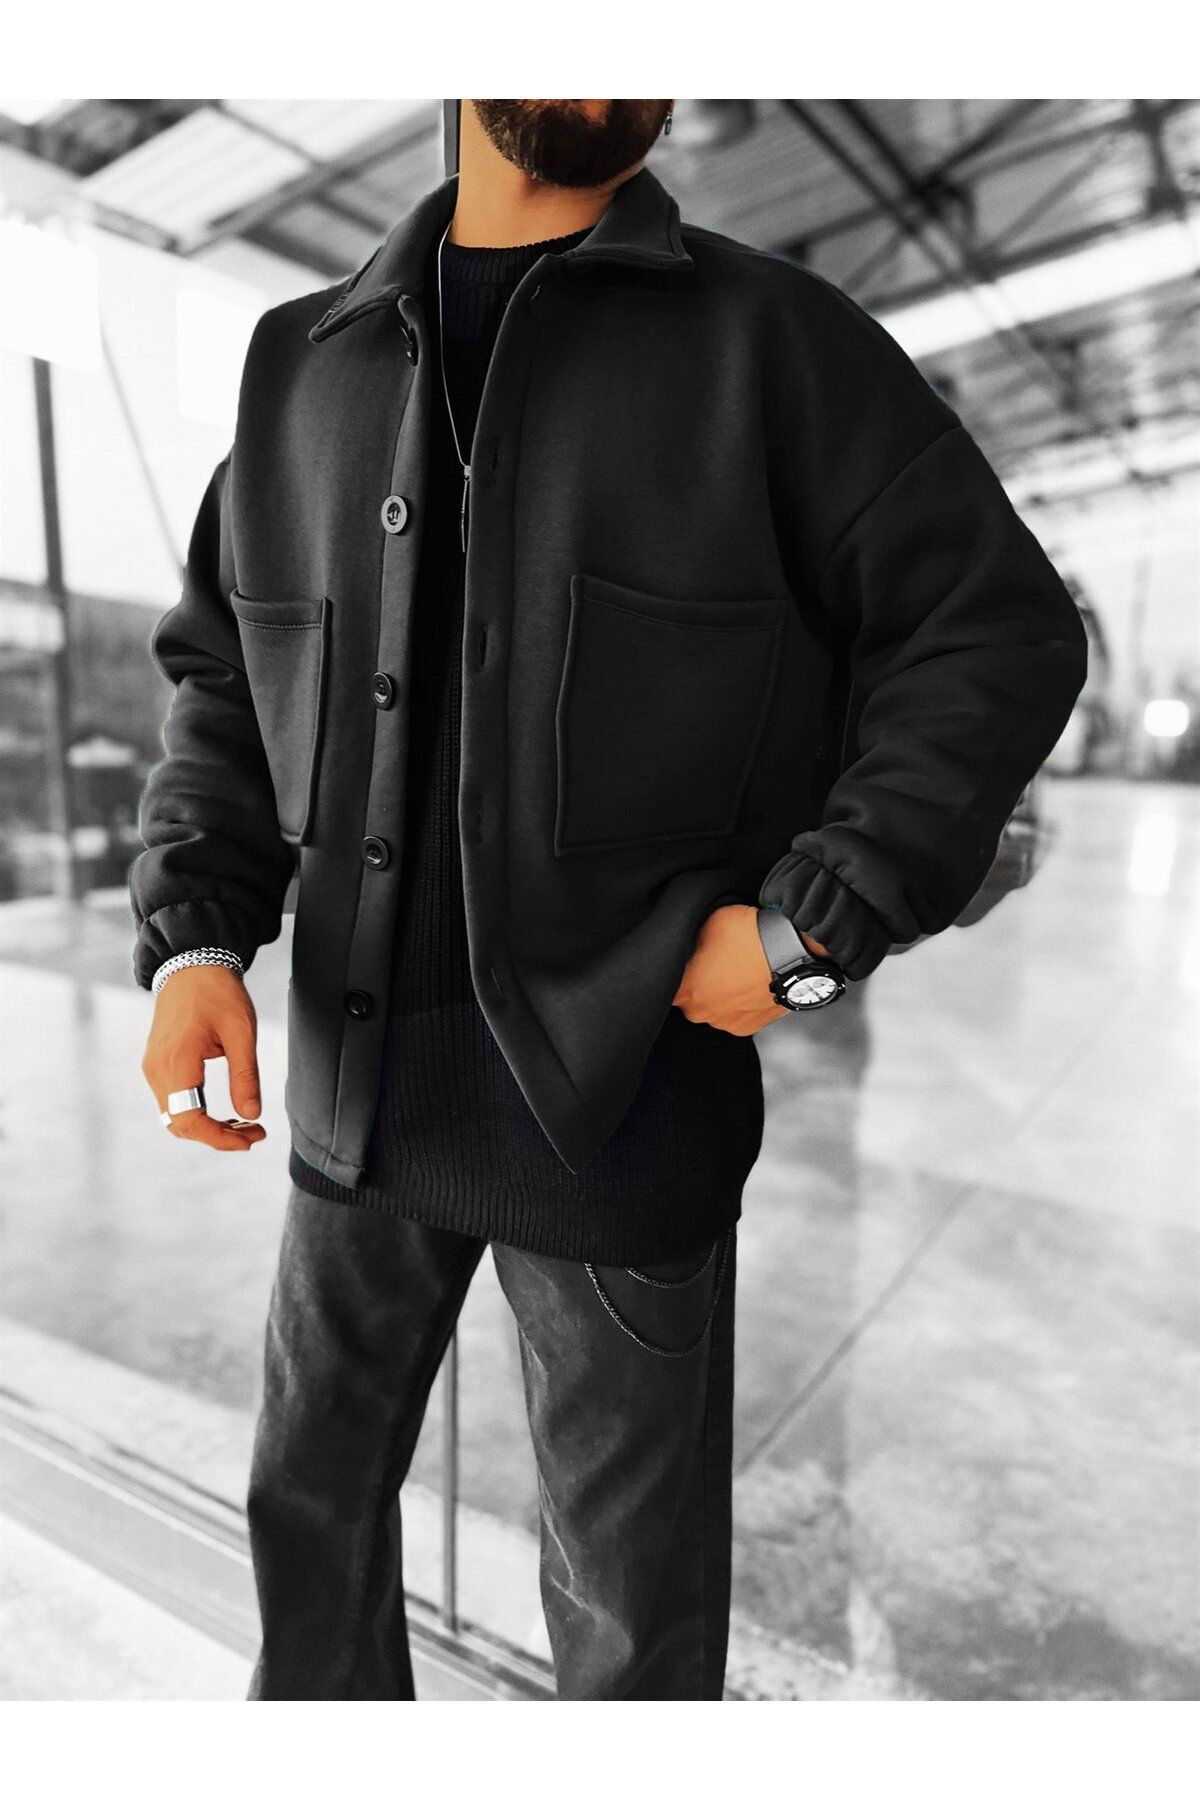 ablikaonline Базовая повседневная куртка Oversize Black 2887black